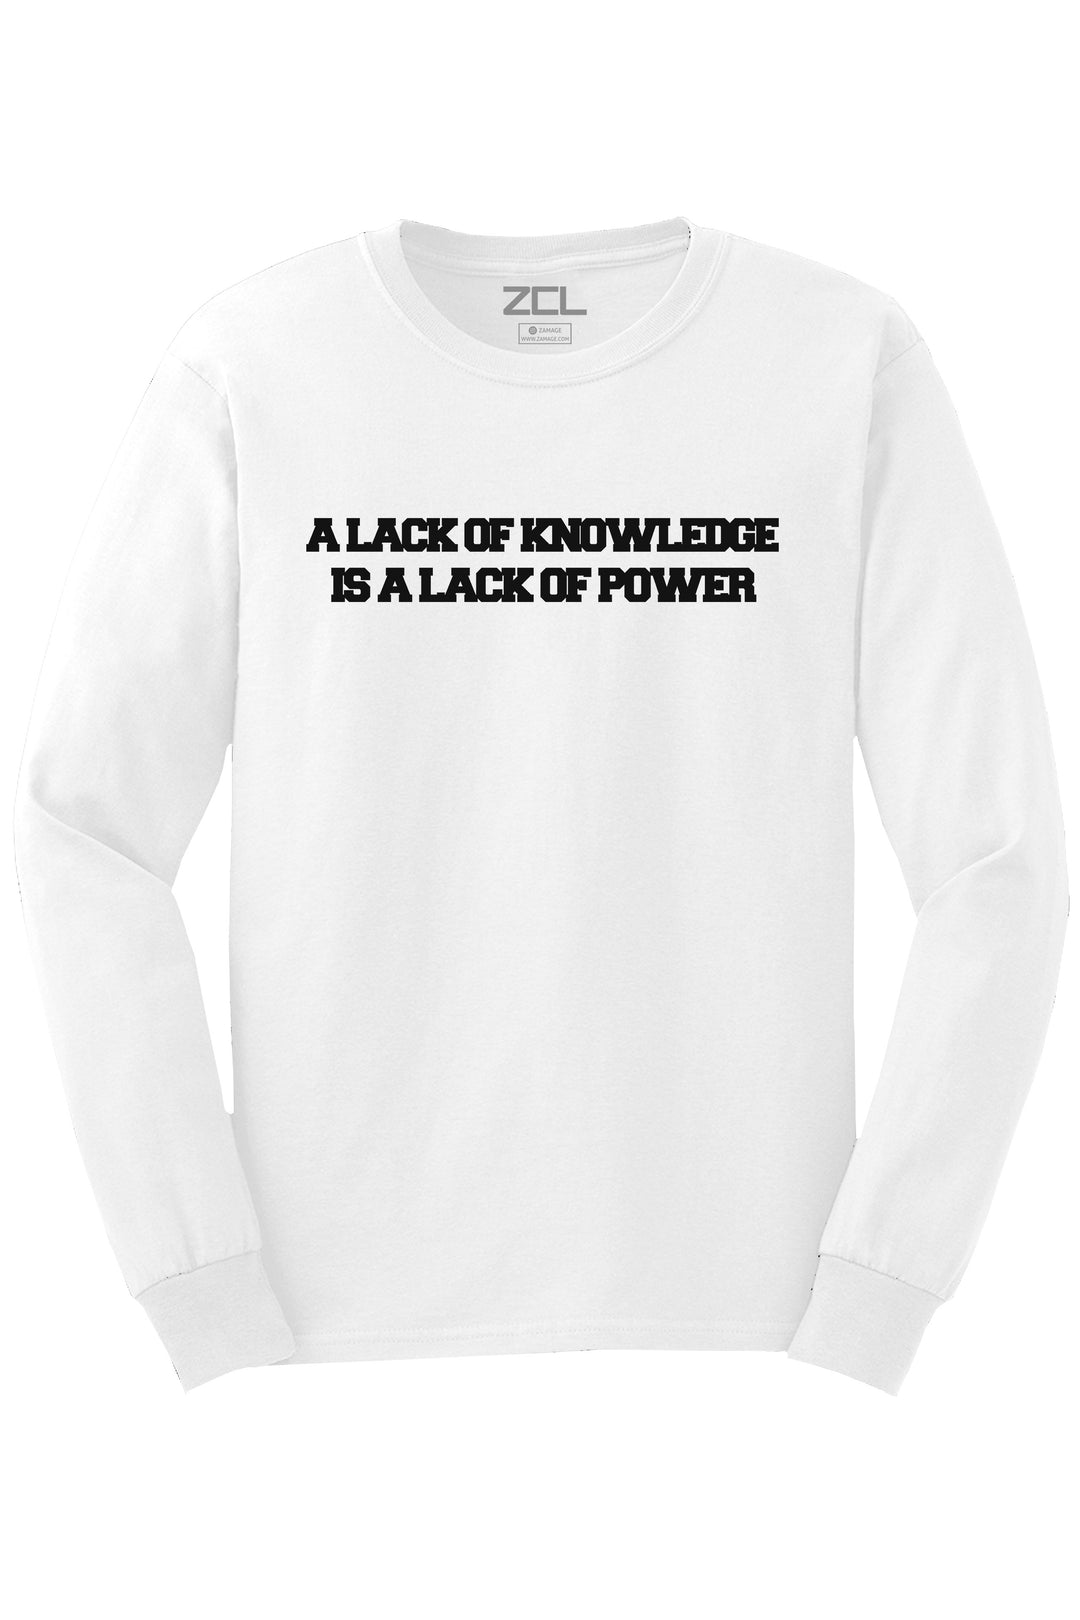 Knowledge & Power Long Sleeve Tee (Black Logo) - Zamage